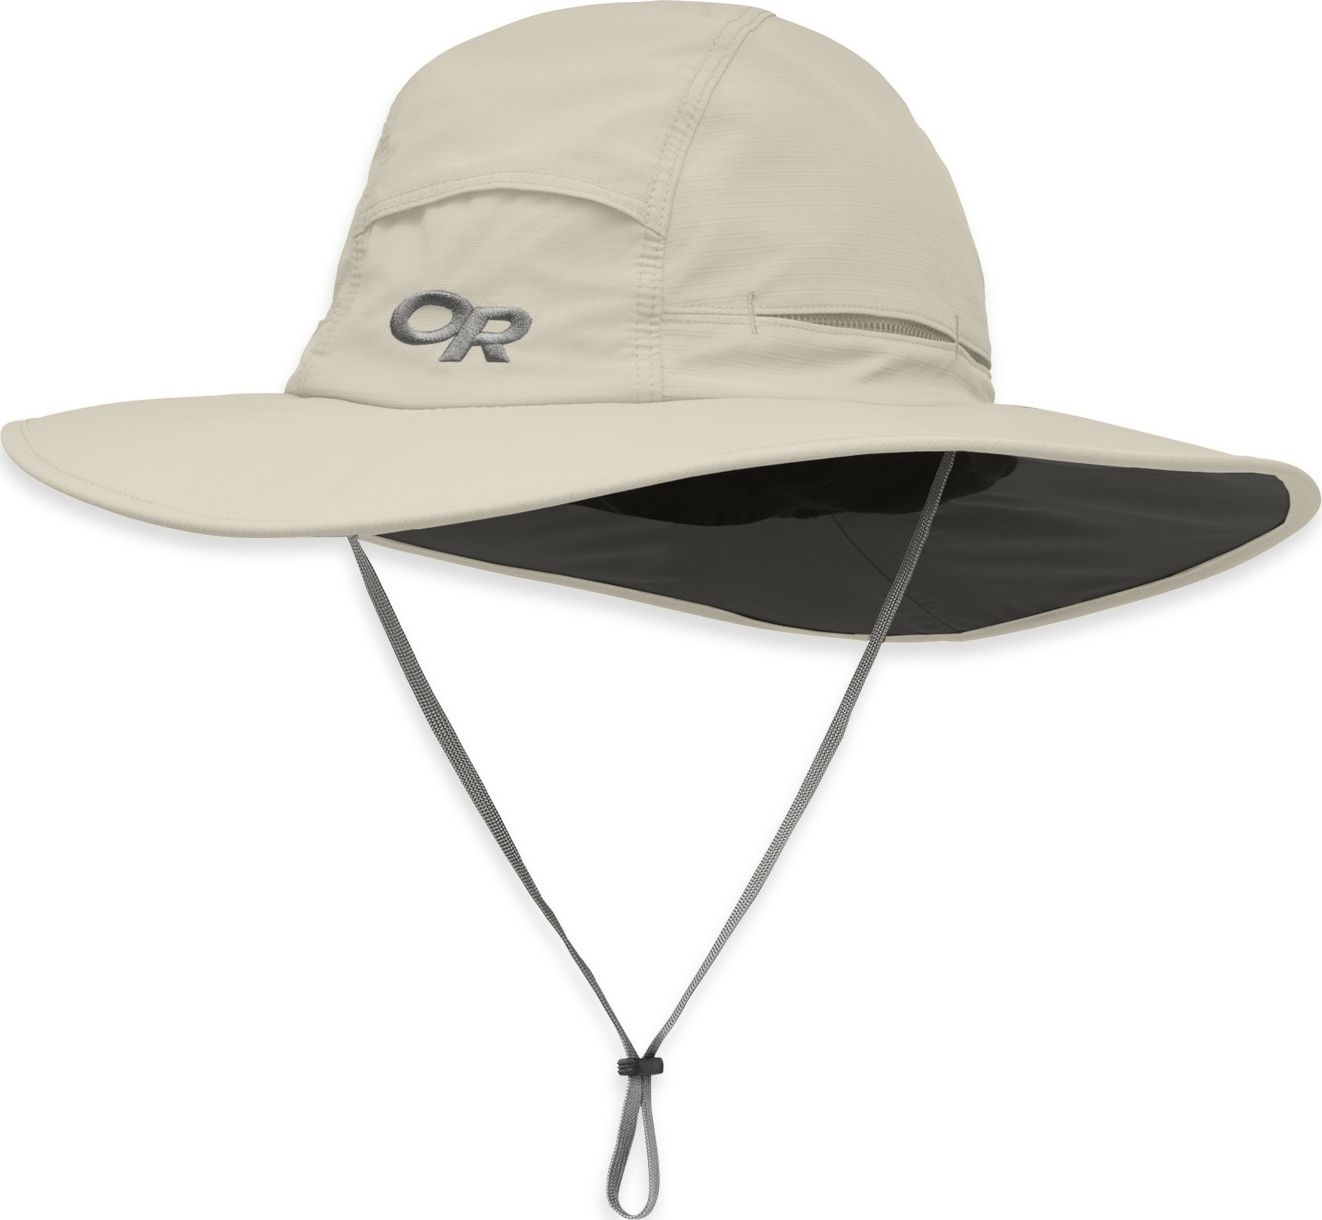 Outdoor Research Men's Sunbriolet Sun Hat Sand